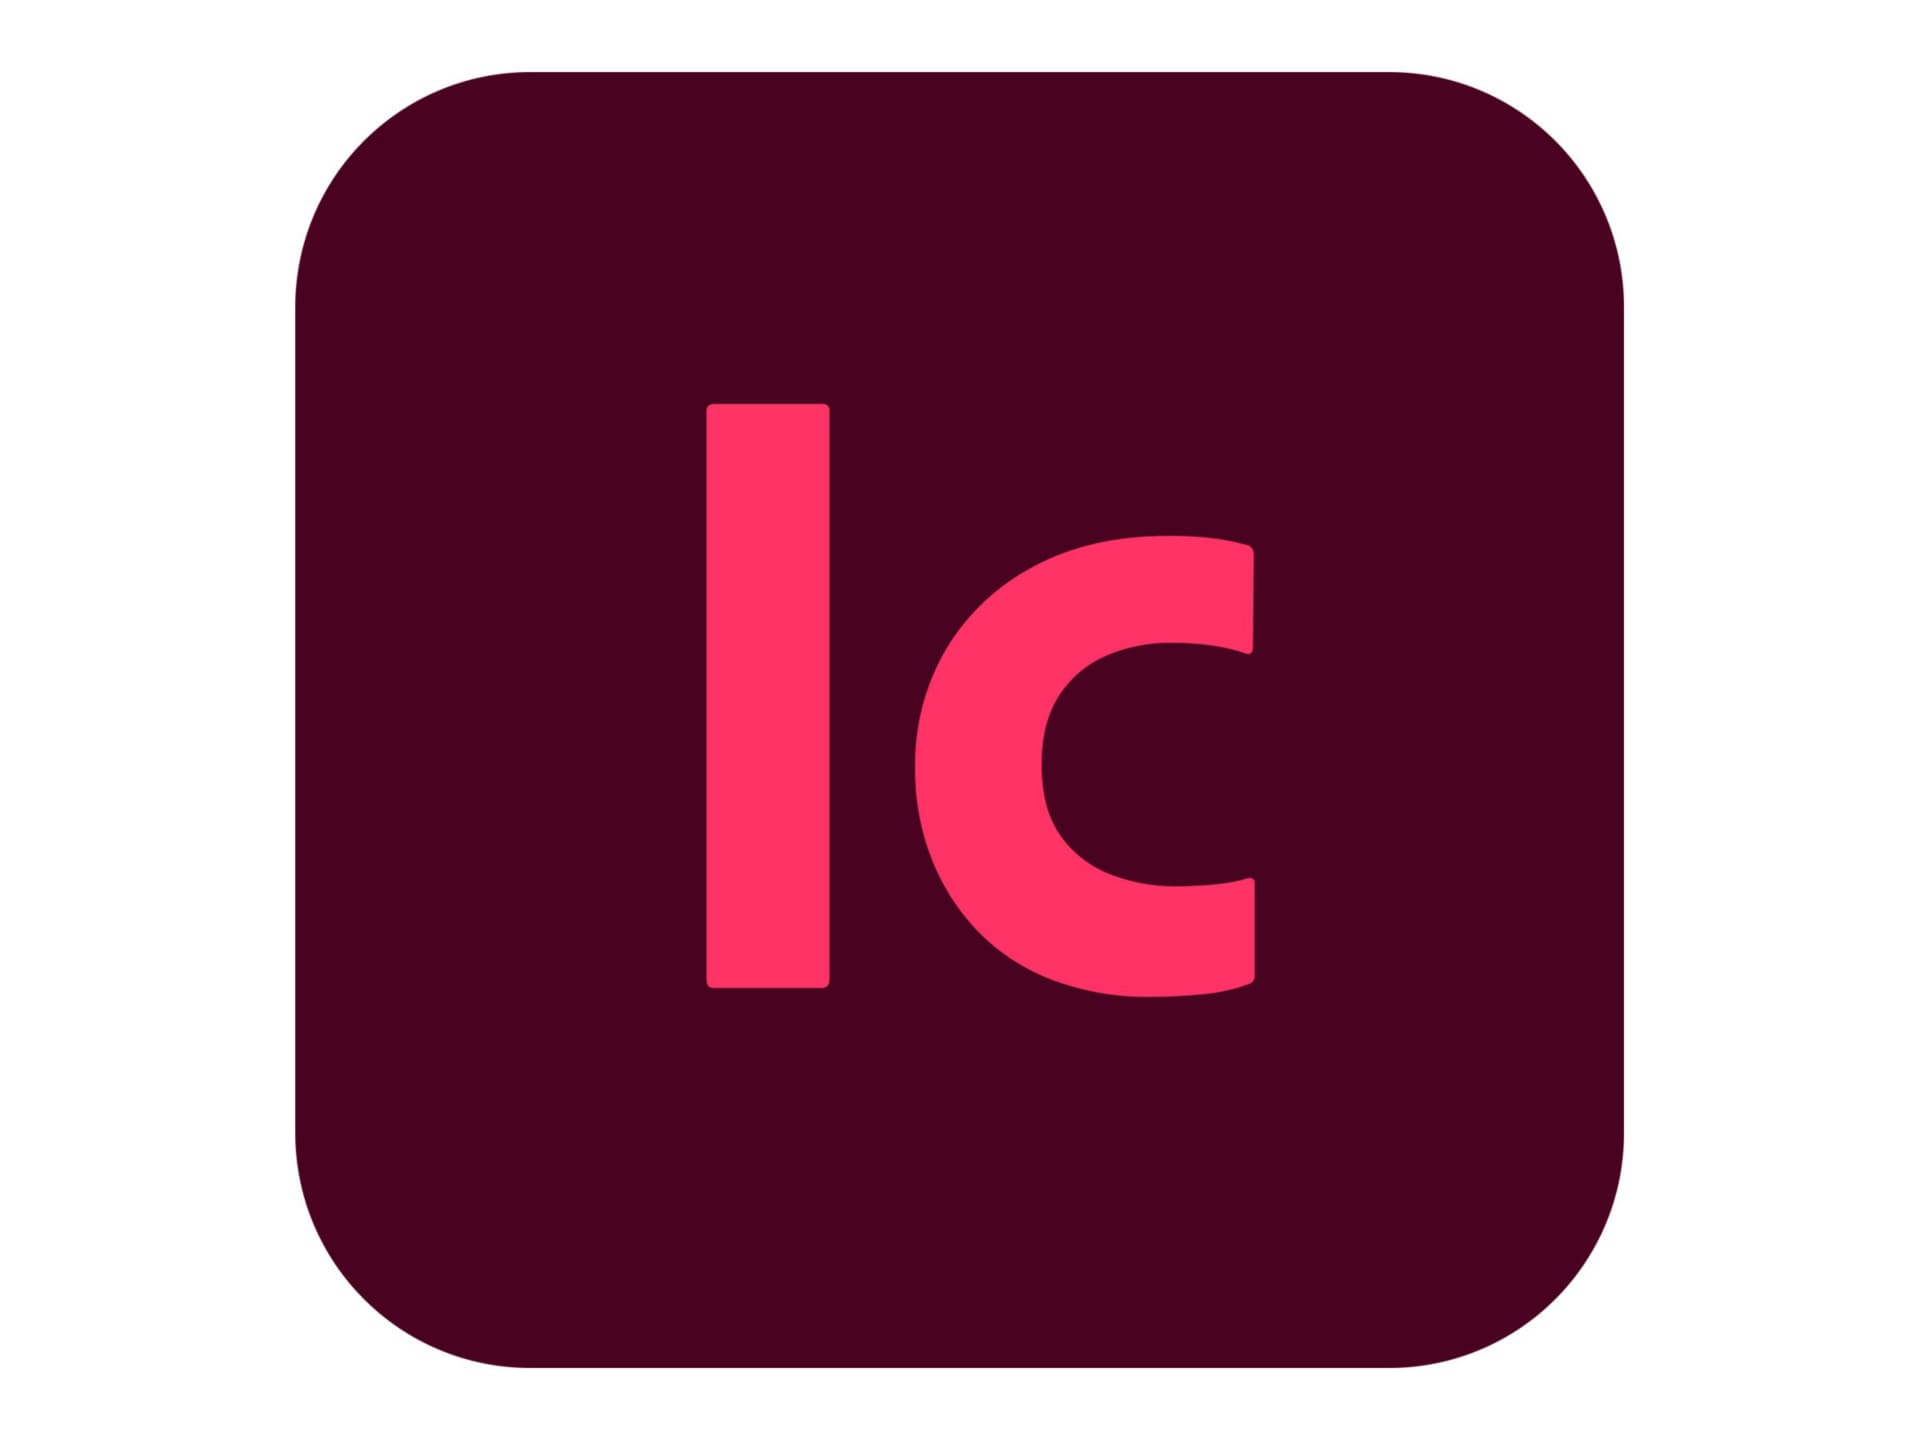 Adobe InCopy CC for Enterprise - Subscription New (2 months) - 1 named user